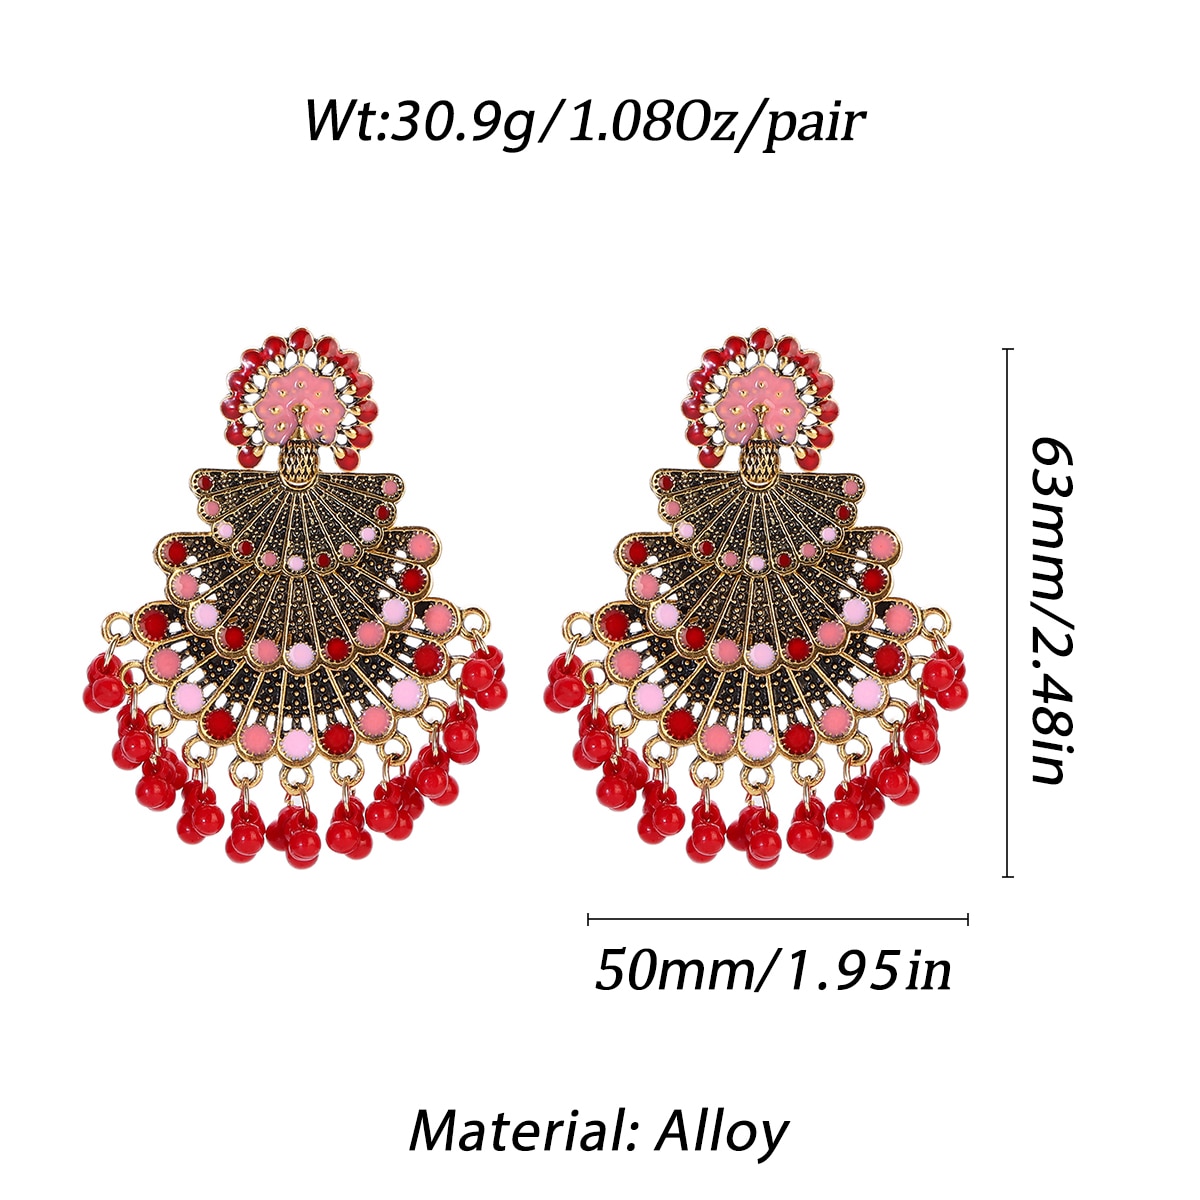 Indian-Jewellery-Red-White-Sector-Jhumka-Earrings-For-Women-Orecchini-Retro-Pearl-Beads-Tassel-Earri-1005004587102350-7